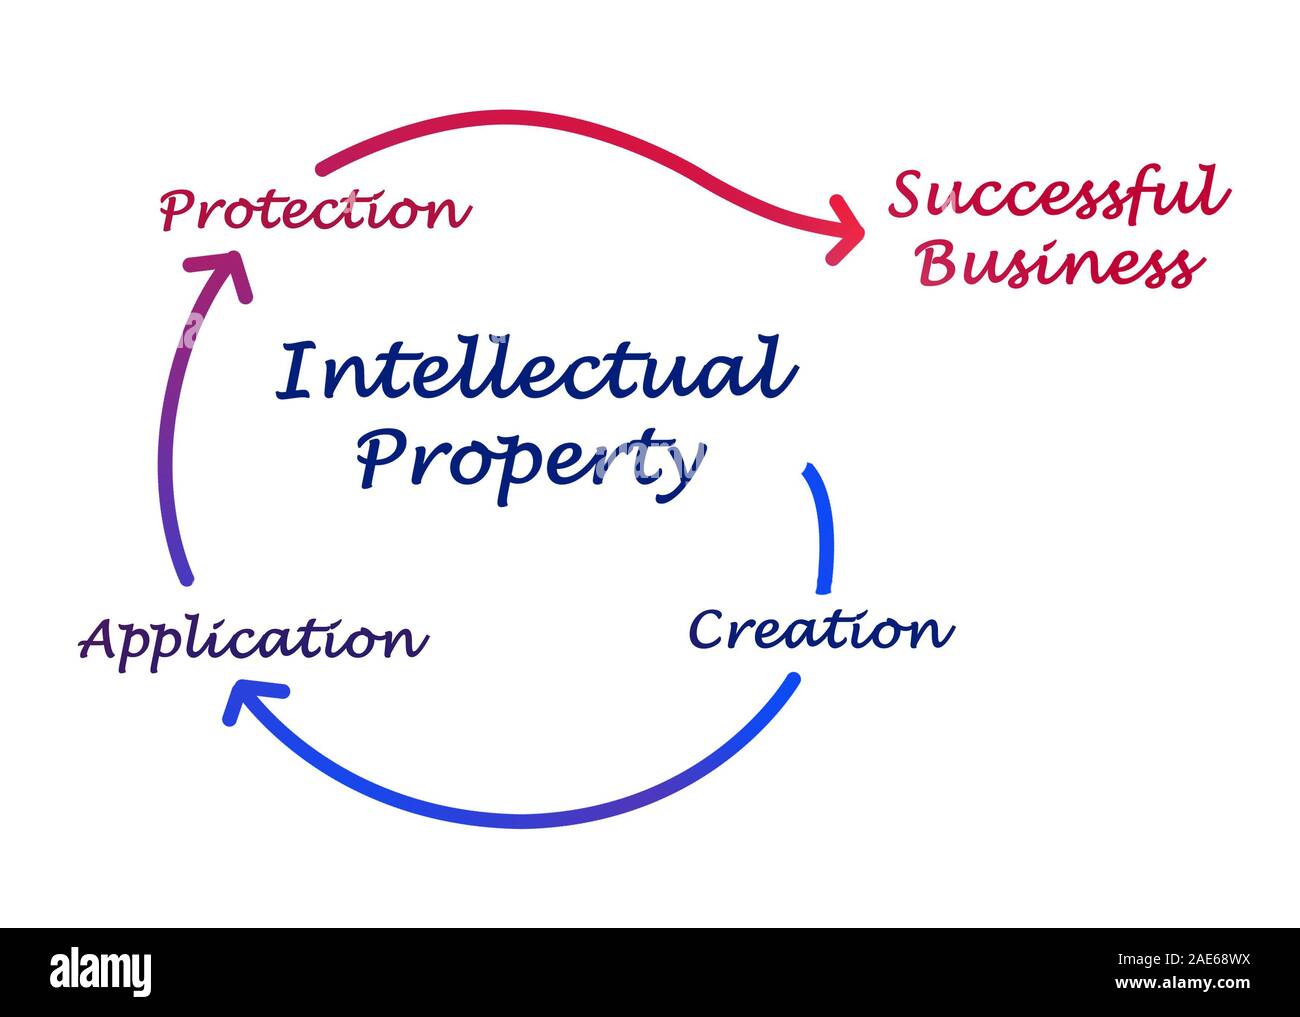 Intellectual property diagram Stock Photo Alamy